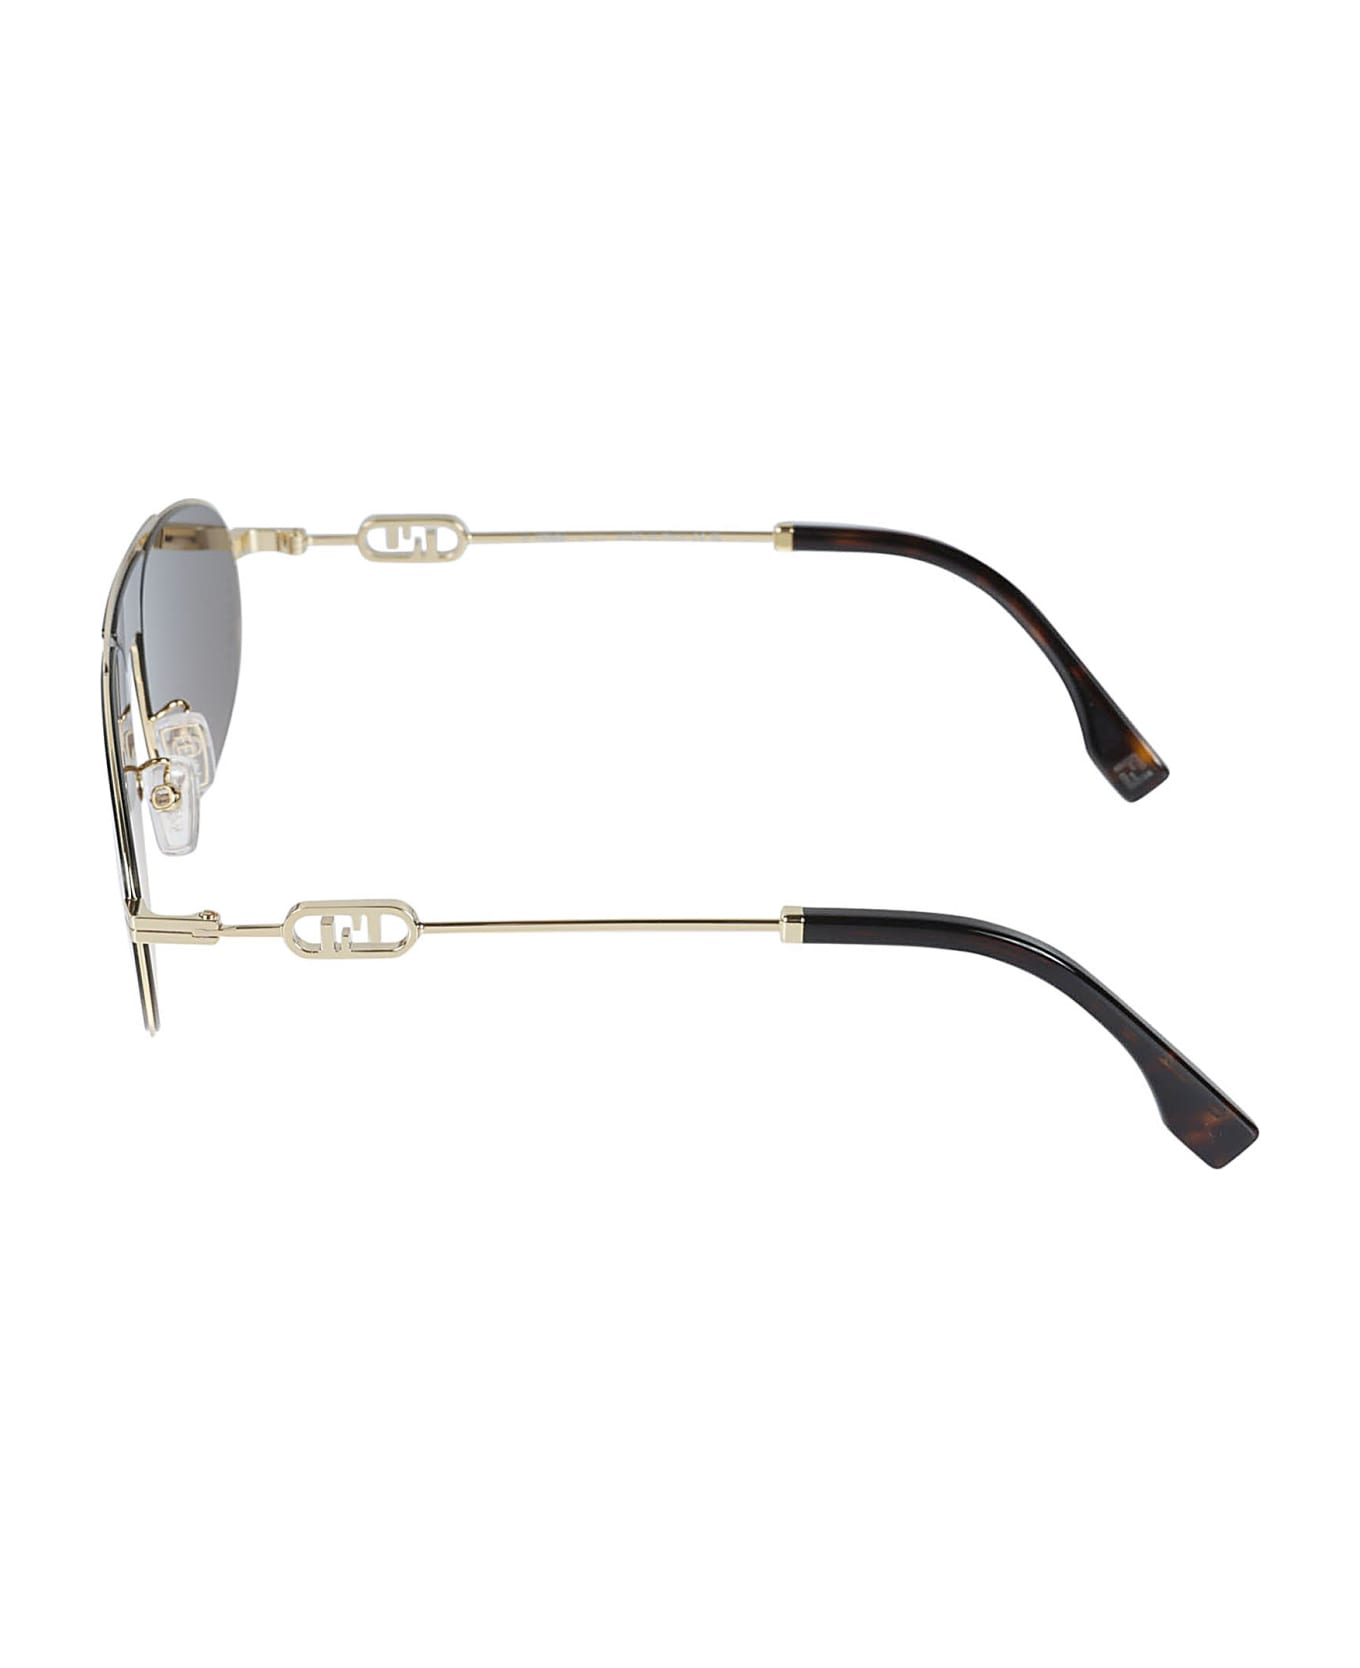 Fendi Eyewear Oval Aviator Sunglasses - N/A